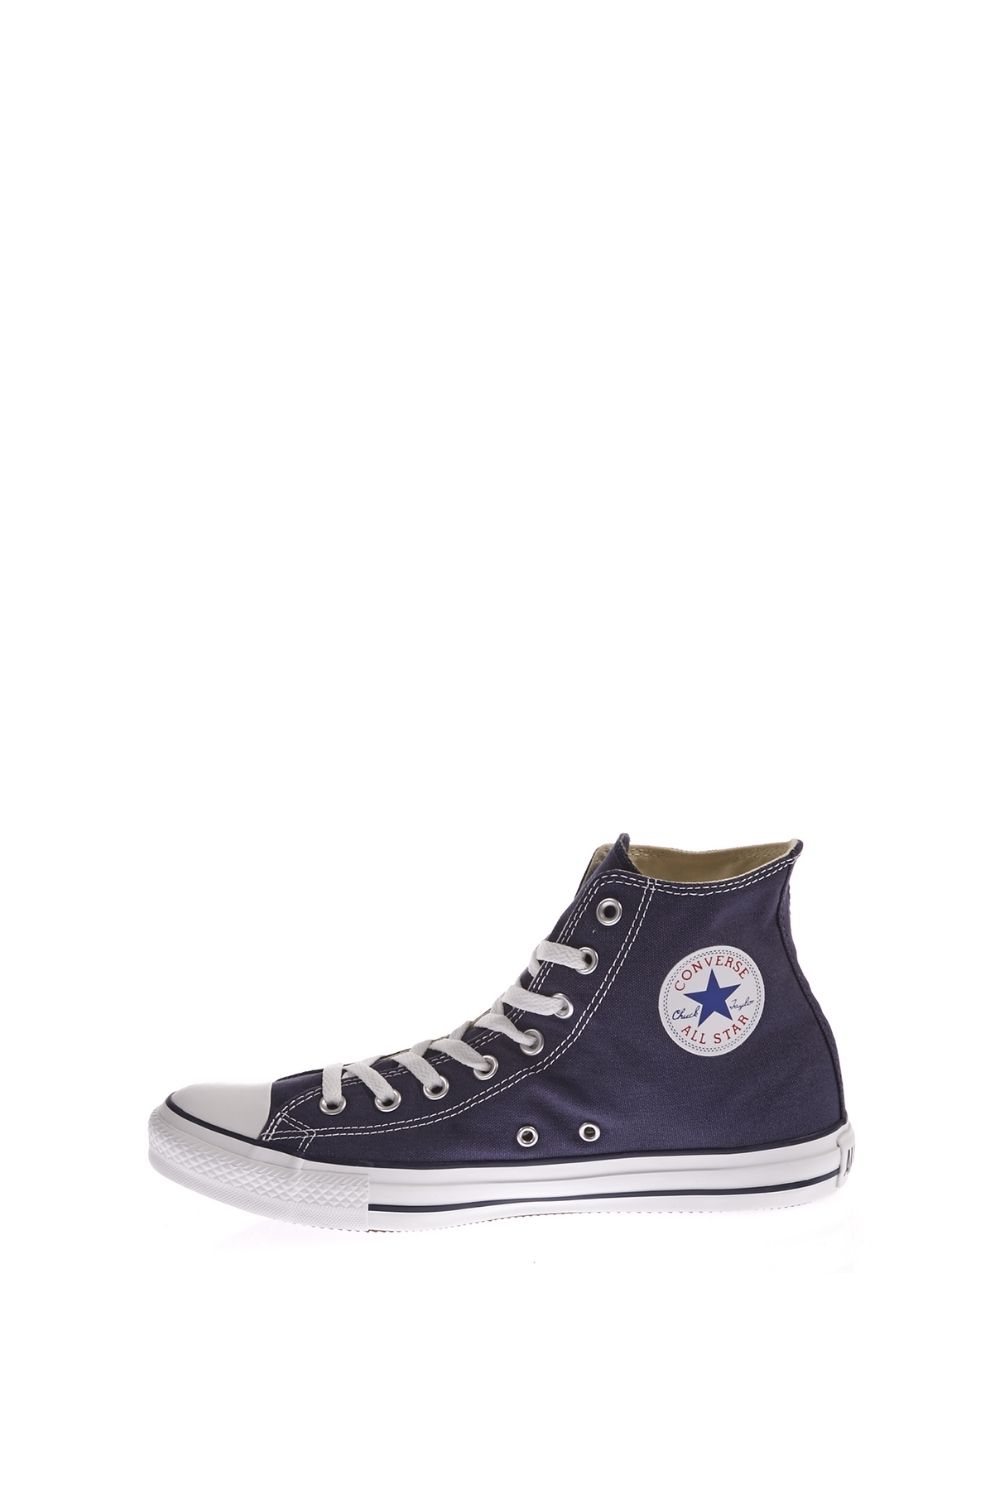 CONVERSE - Unisex Μποτάκια Chuck Taylor μπλε Ανδρικά/Παπούτσια/Sneakers